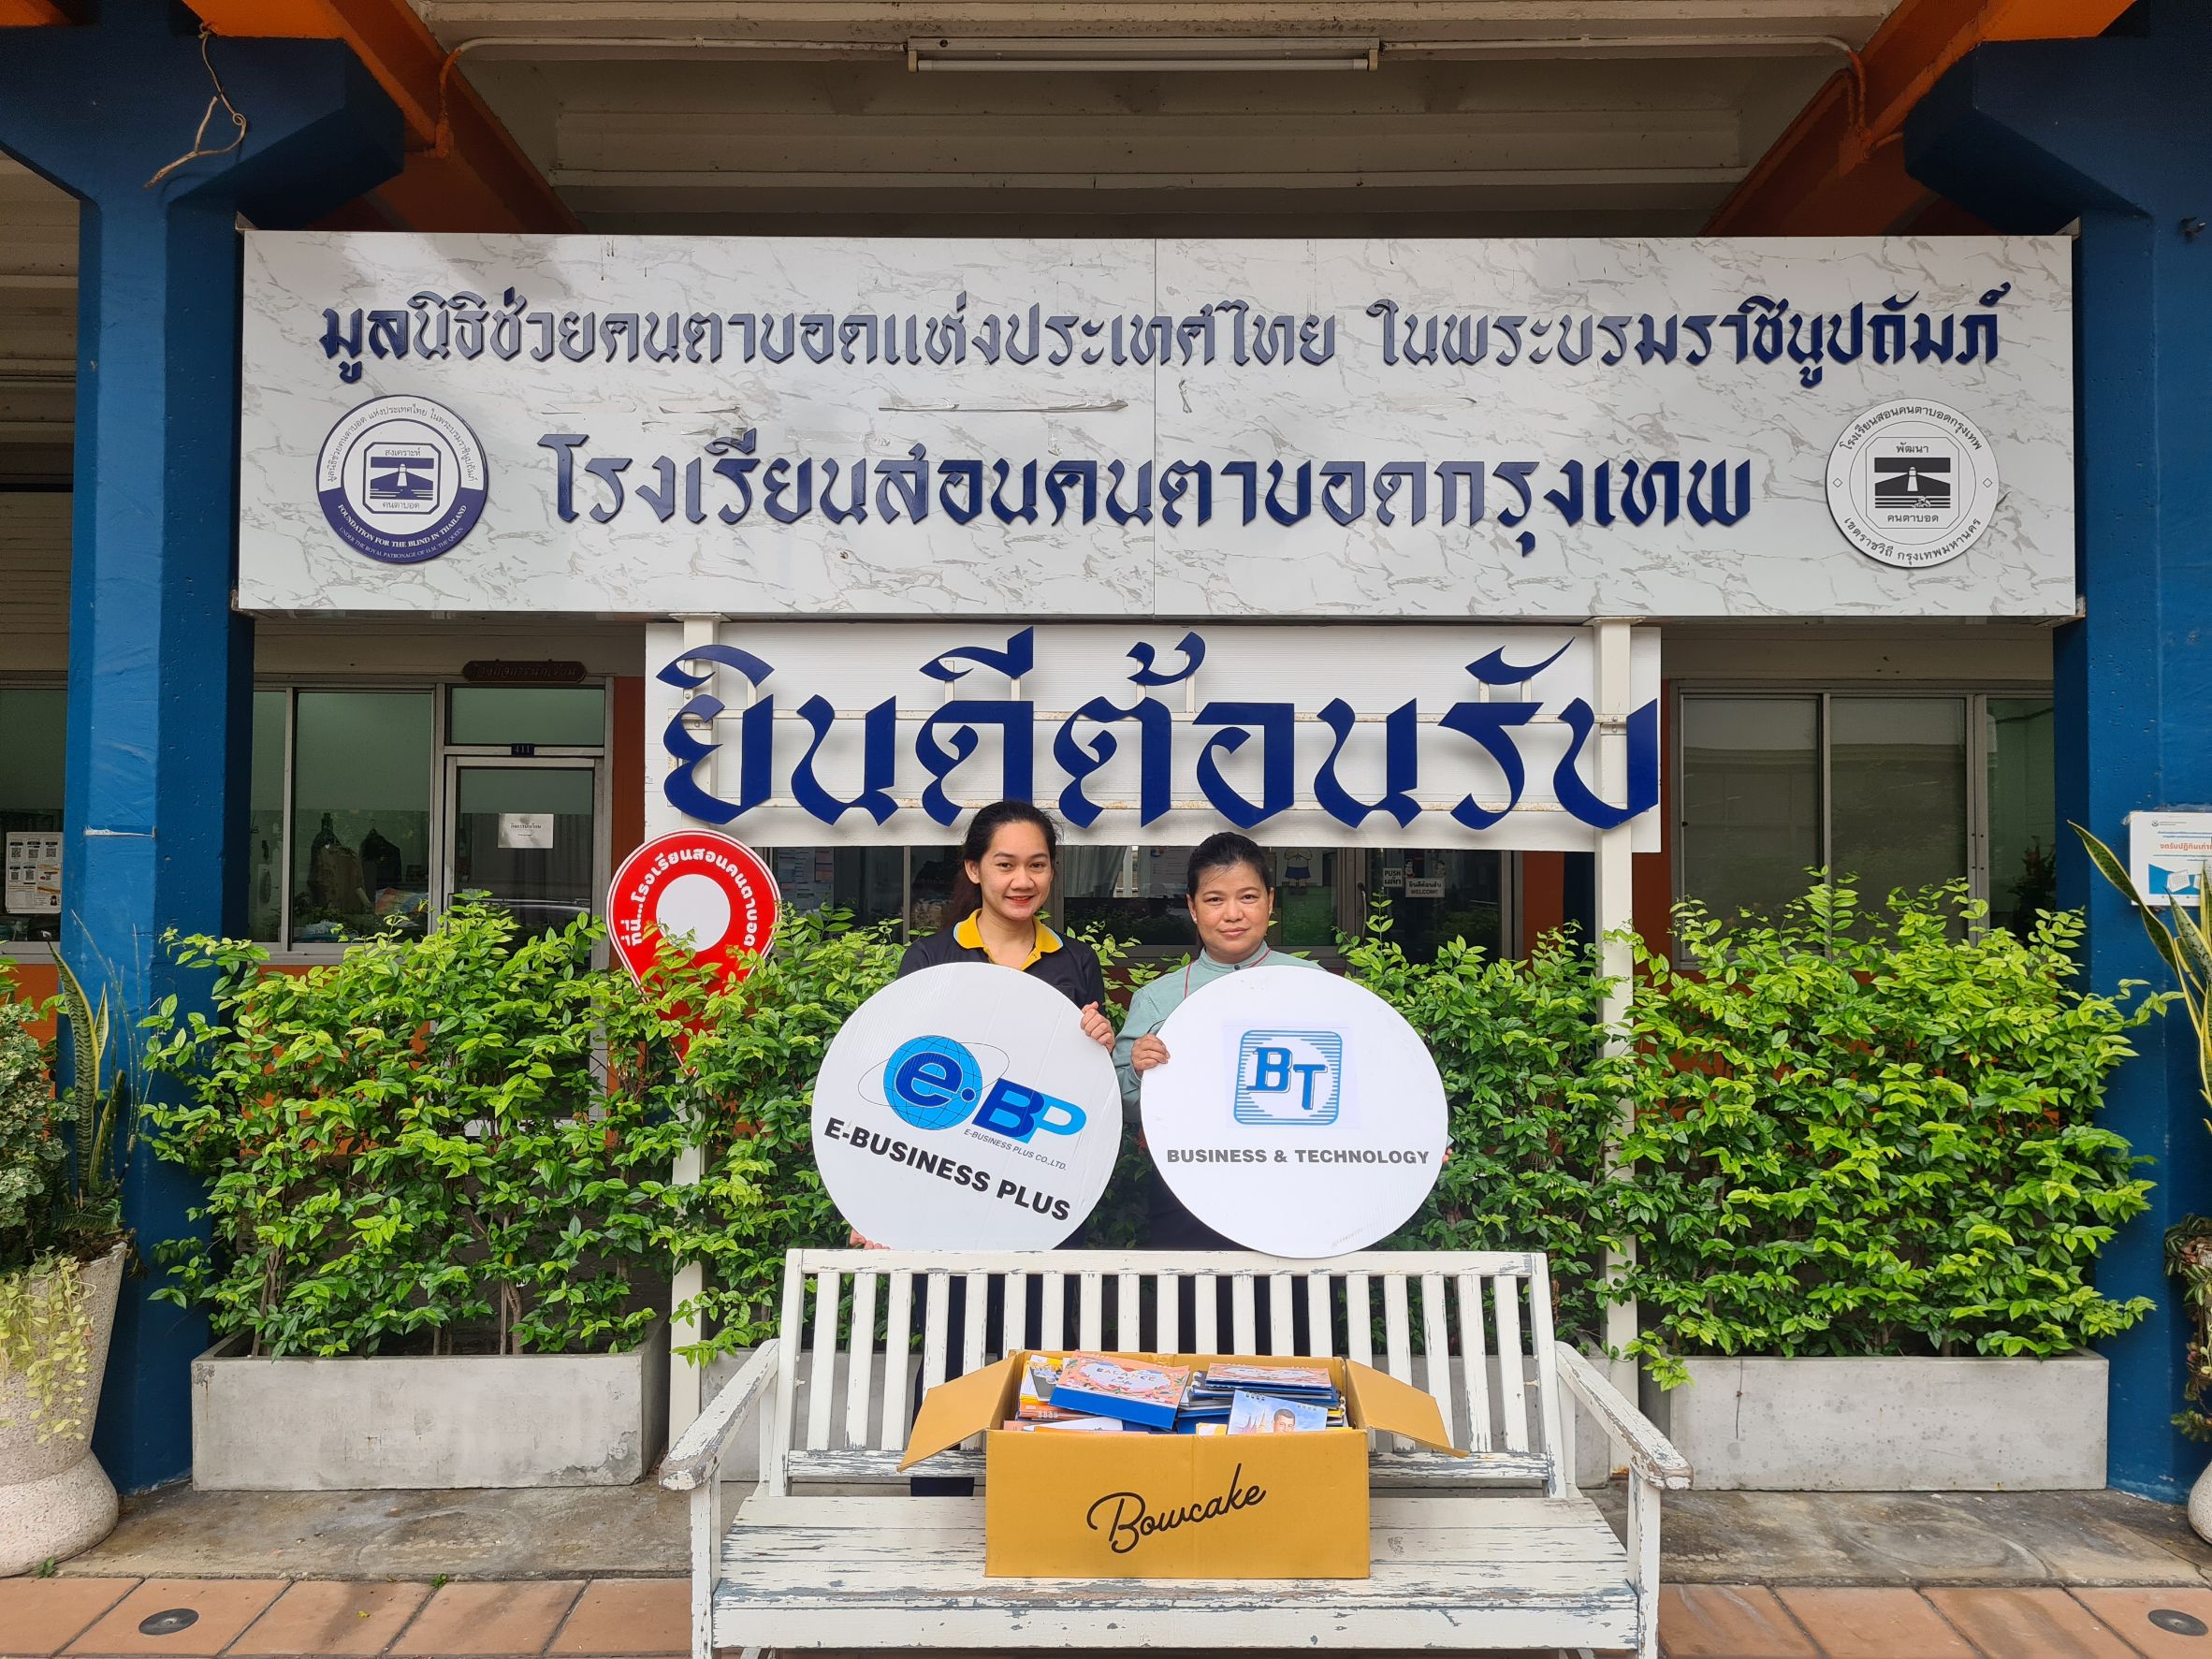 Business Plus ร่วมบริจาคปฏิทินตั้งโต๊ะเก่า มูลนิธิช่วยคนตาบอดแห่งประเทศไทยในพระบรมราชินูปถัมภ์  ในวันเสาร์ที่ 10 กุมภาพันธ์ 2567